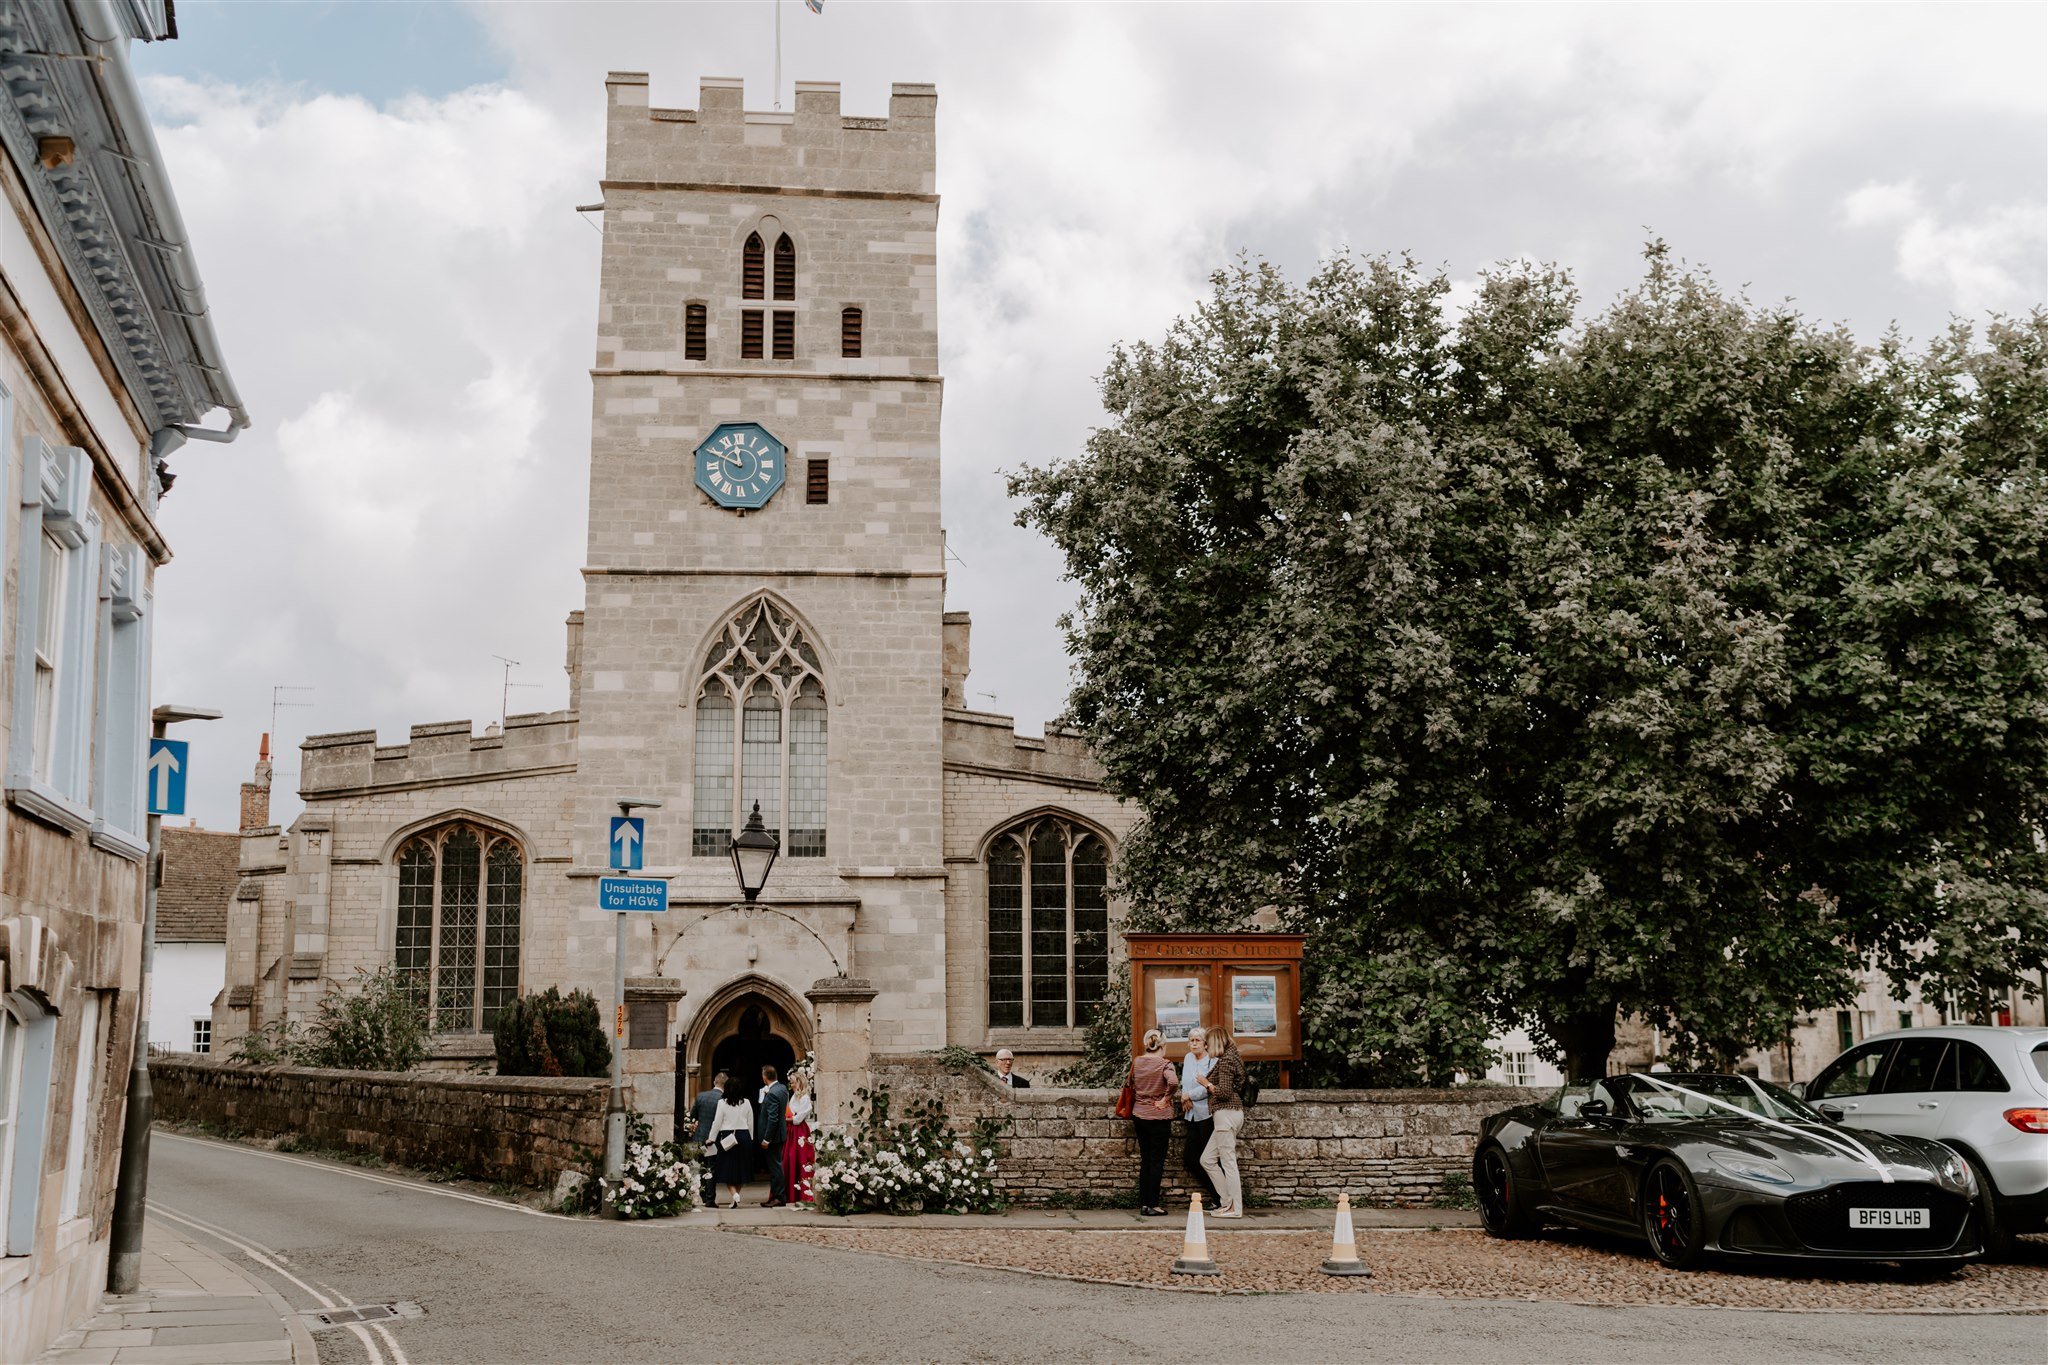 St George's church Stamford marquee wedding 